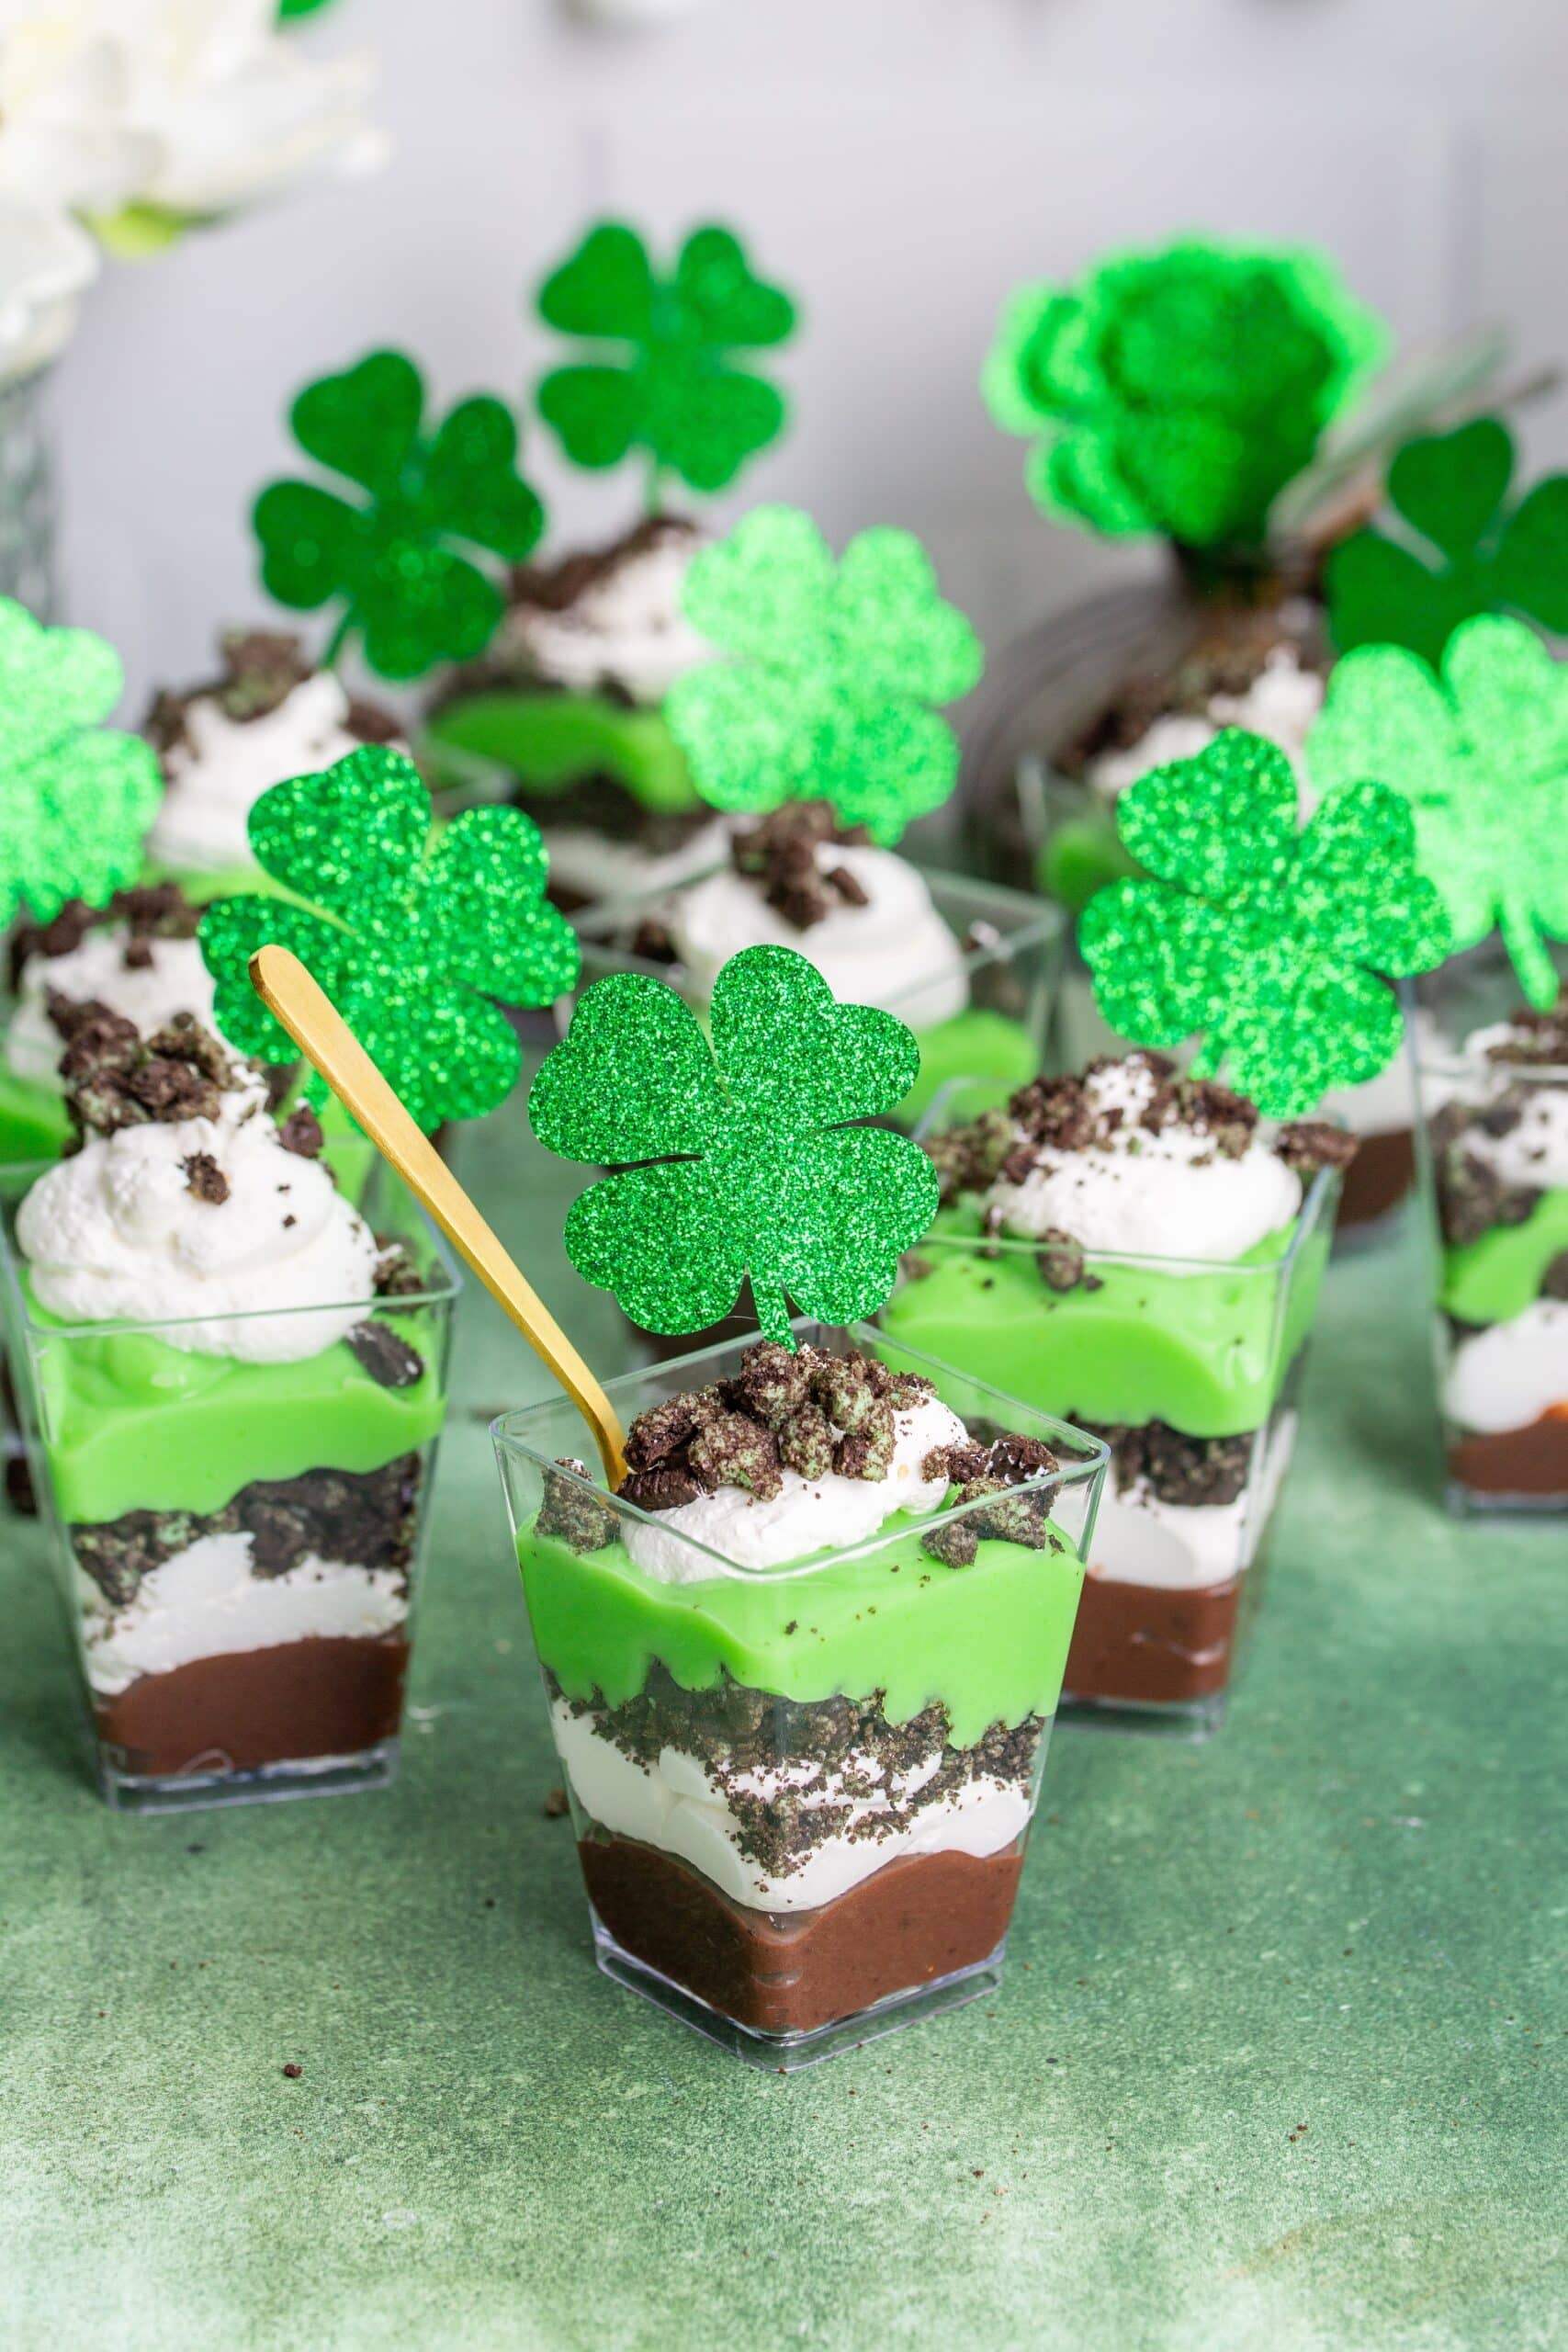 Spiked Mint Chocolate Pudding Parfaits (boozy St. Patrick's Day dessert idea)